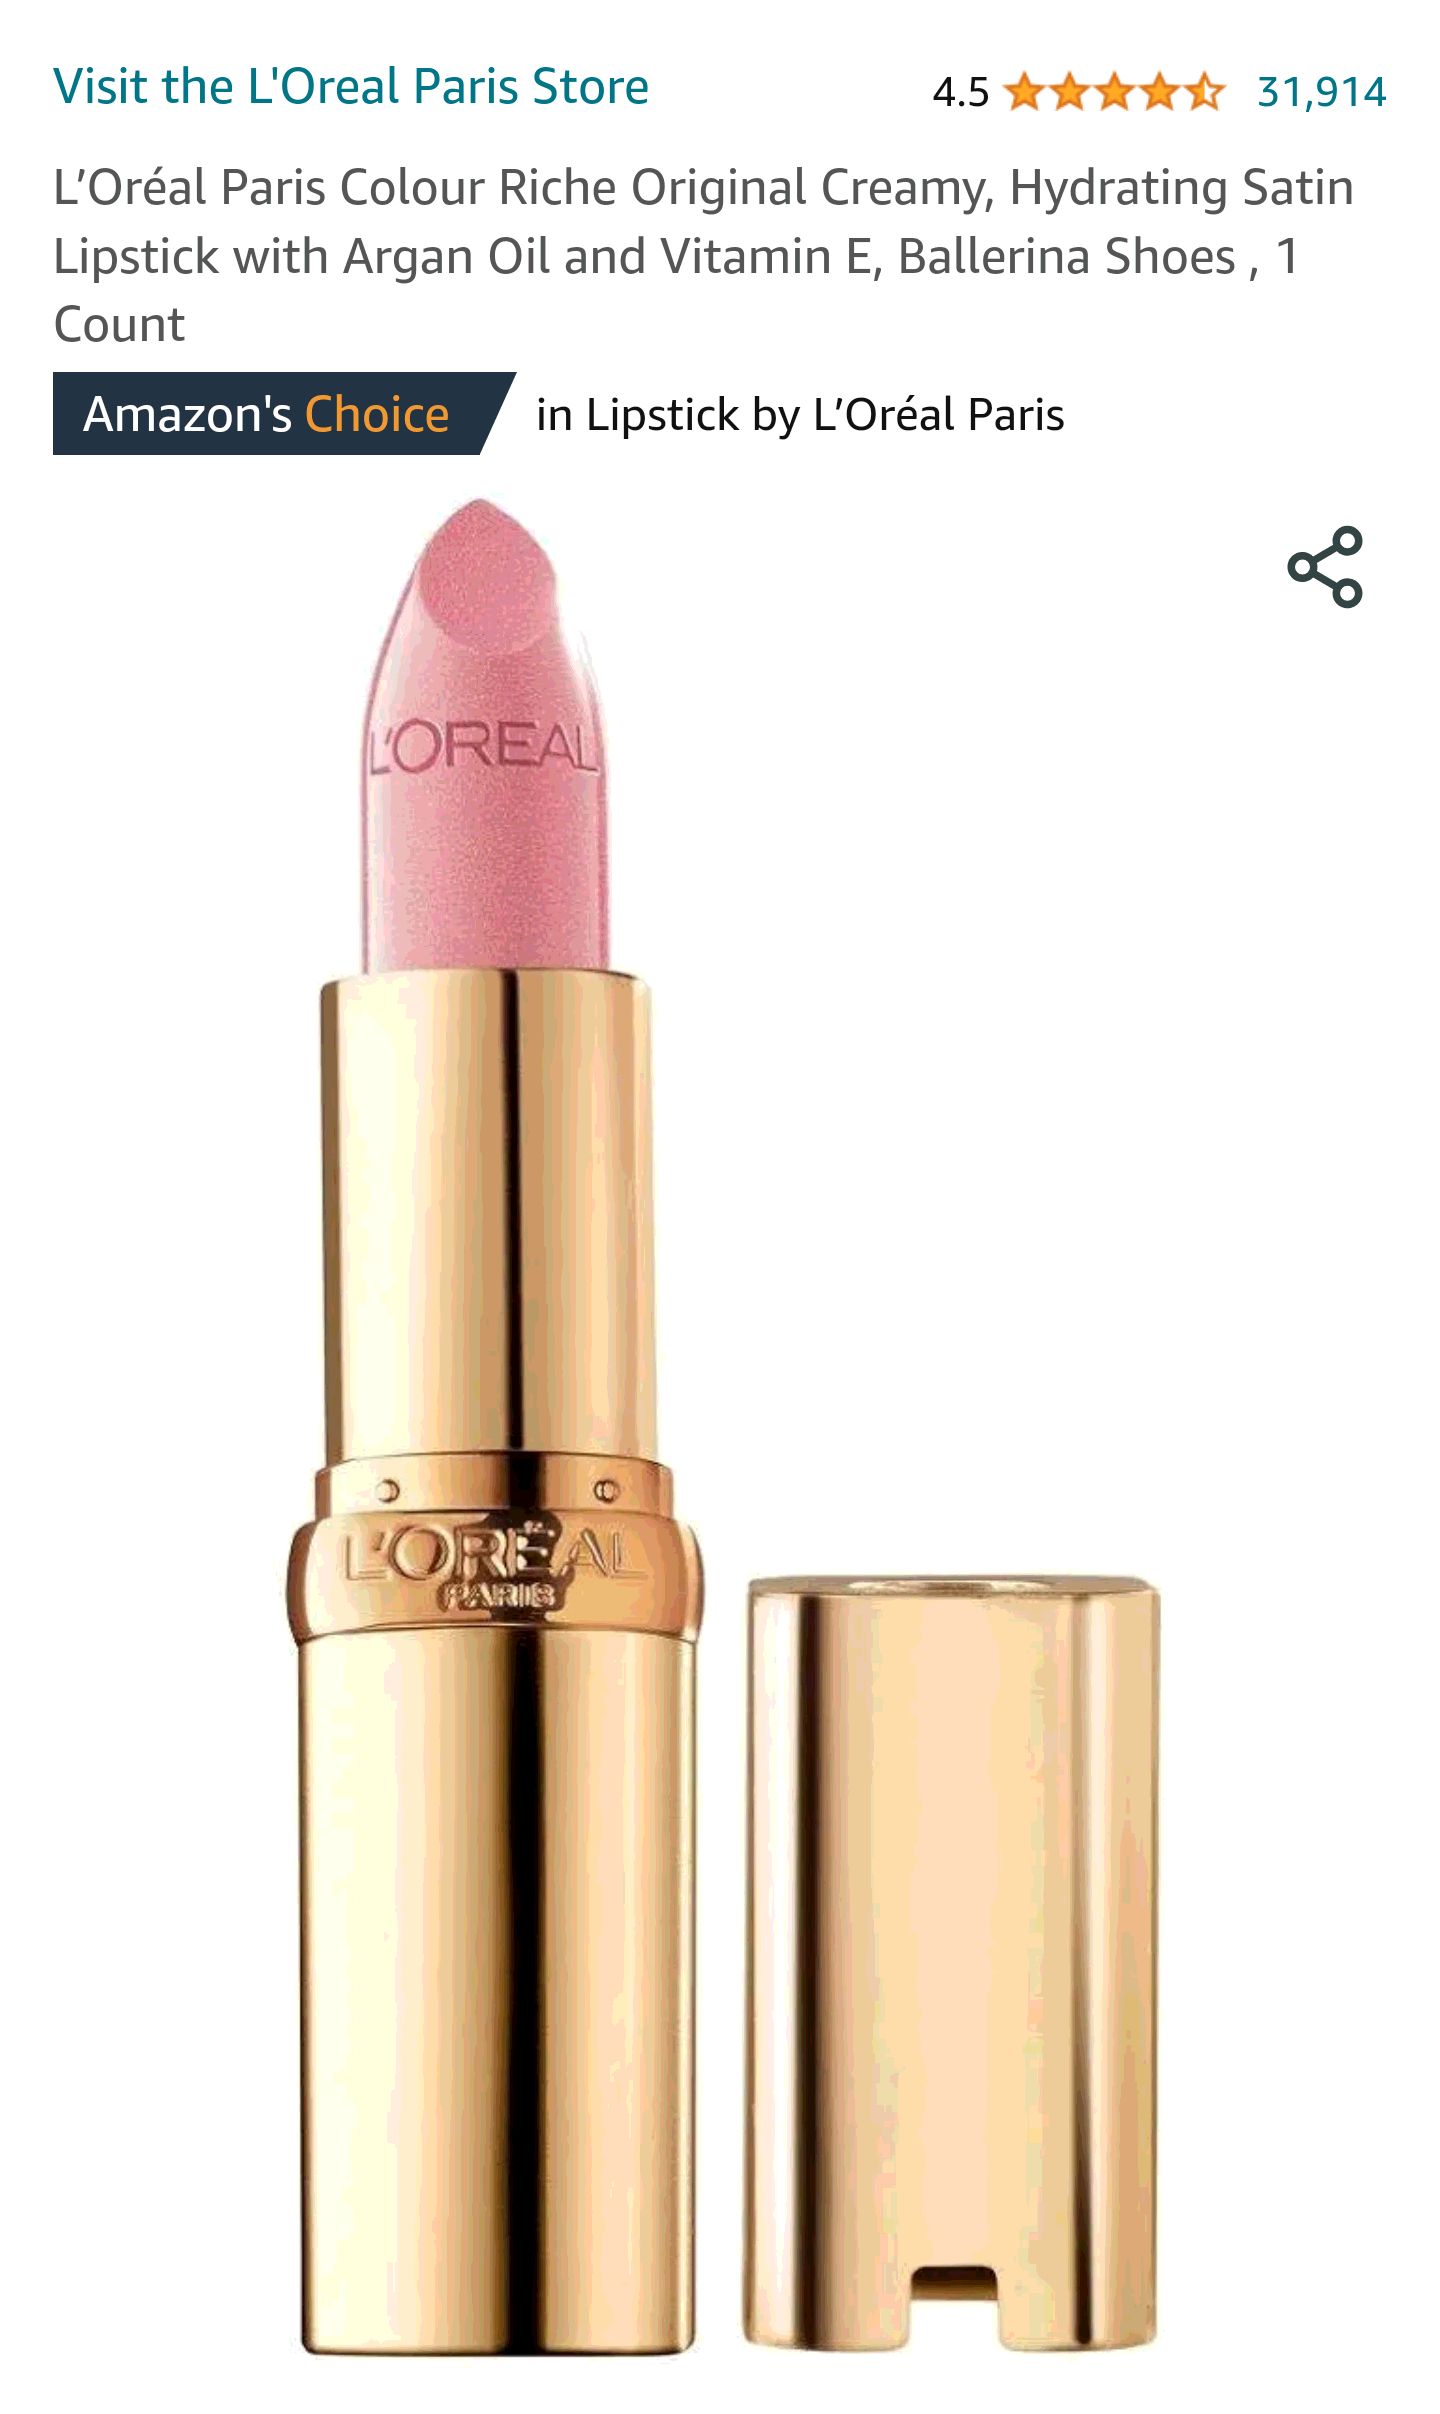 Amazon.com : L’Oréal Paris Colour Riche Original Creamy, Hydrating Satin Lipstick with Argan Oil and Vitamin E, Ballerina Shoes , 1 Count : Lipstick : Beauty & Personal Care